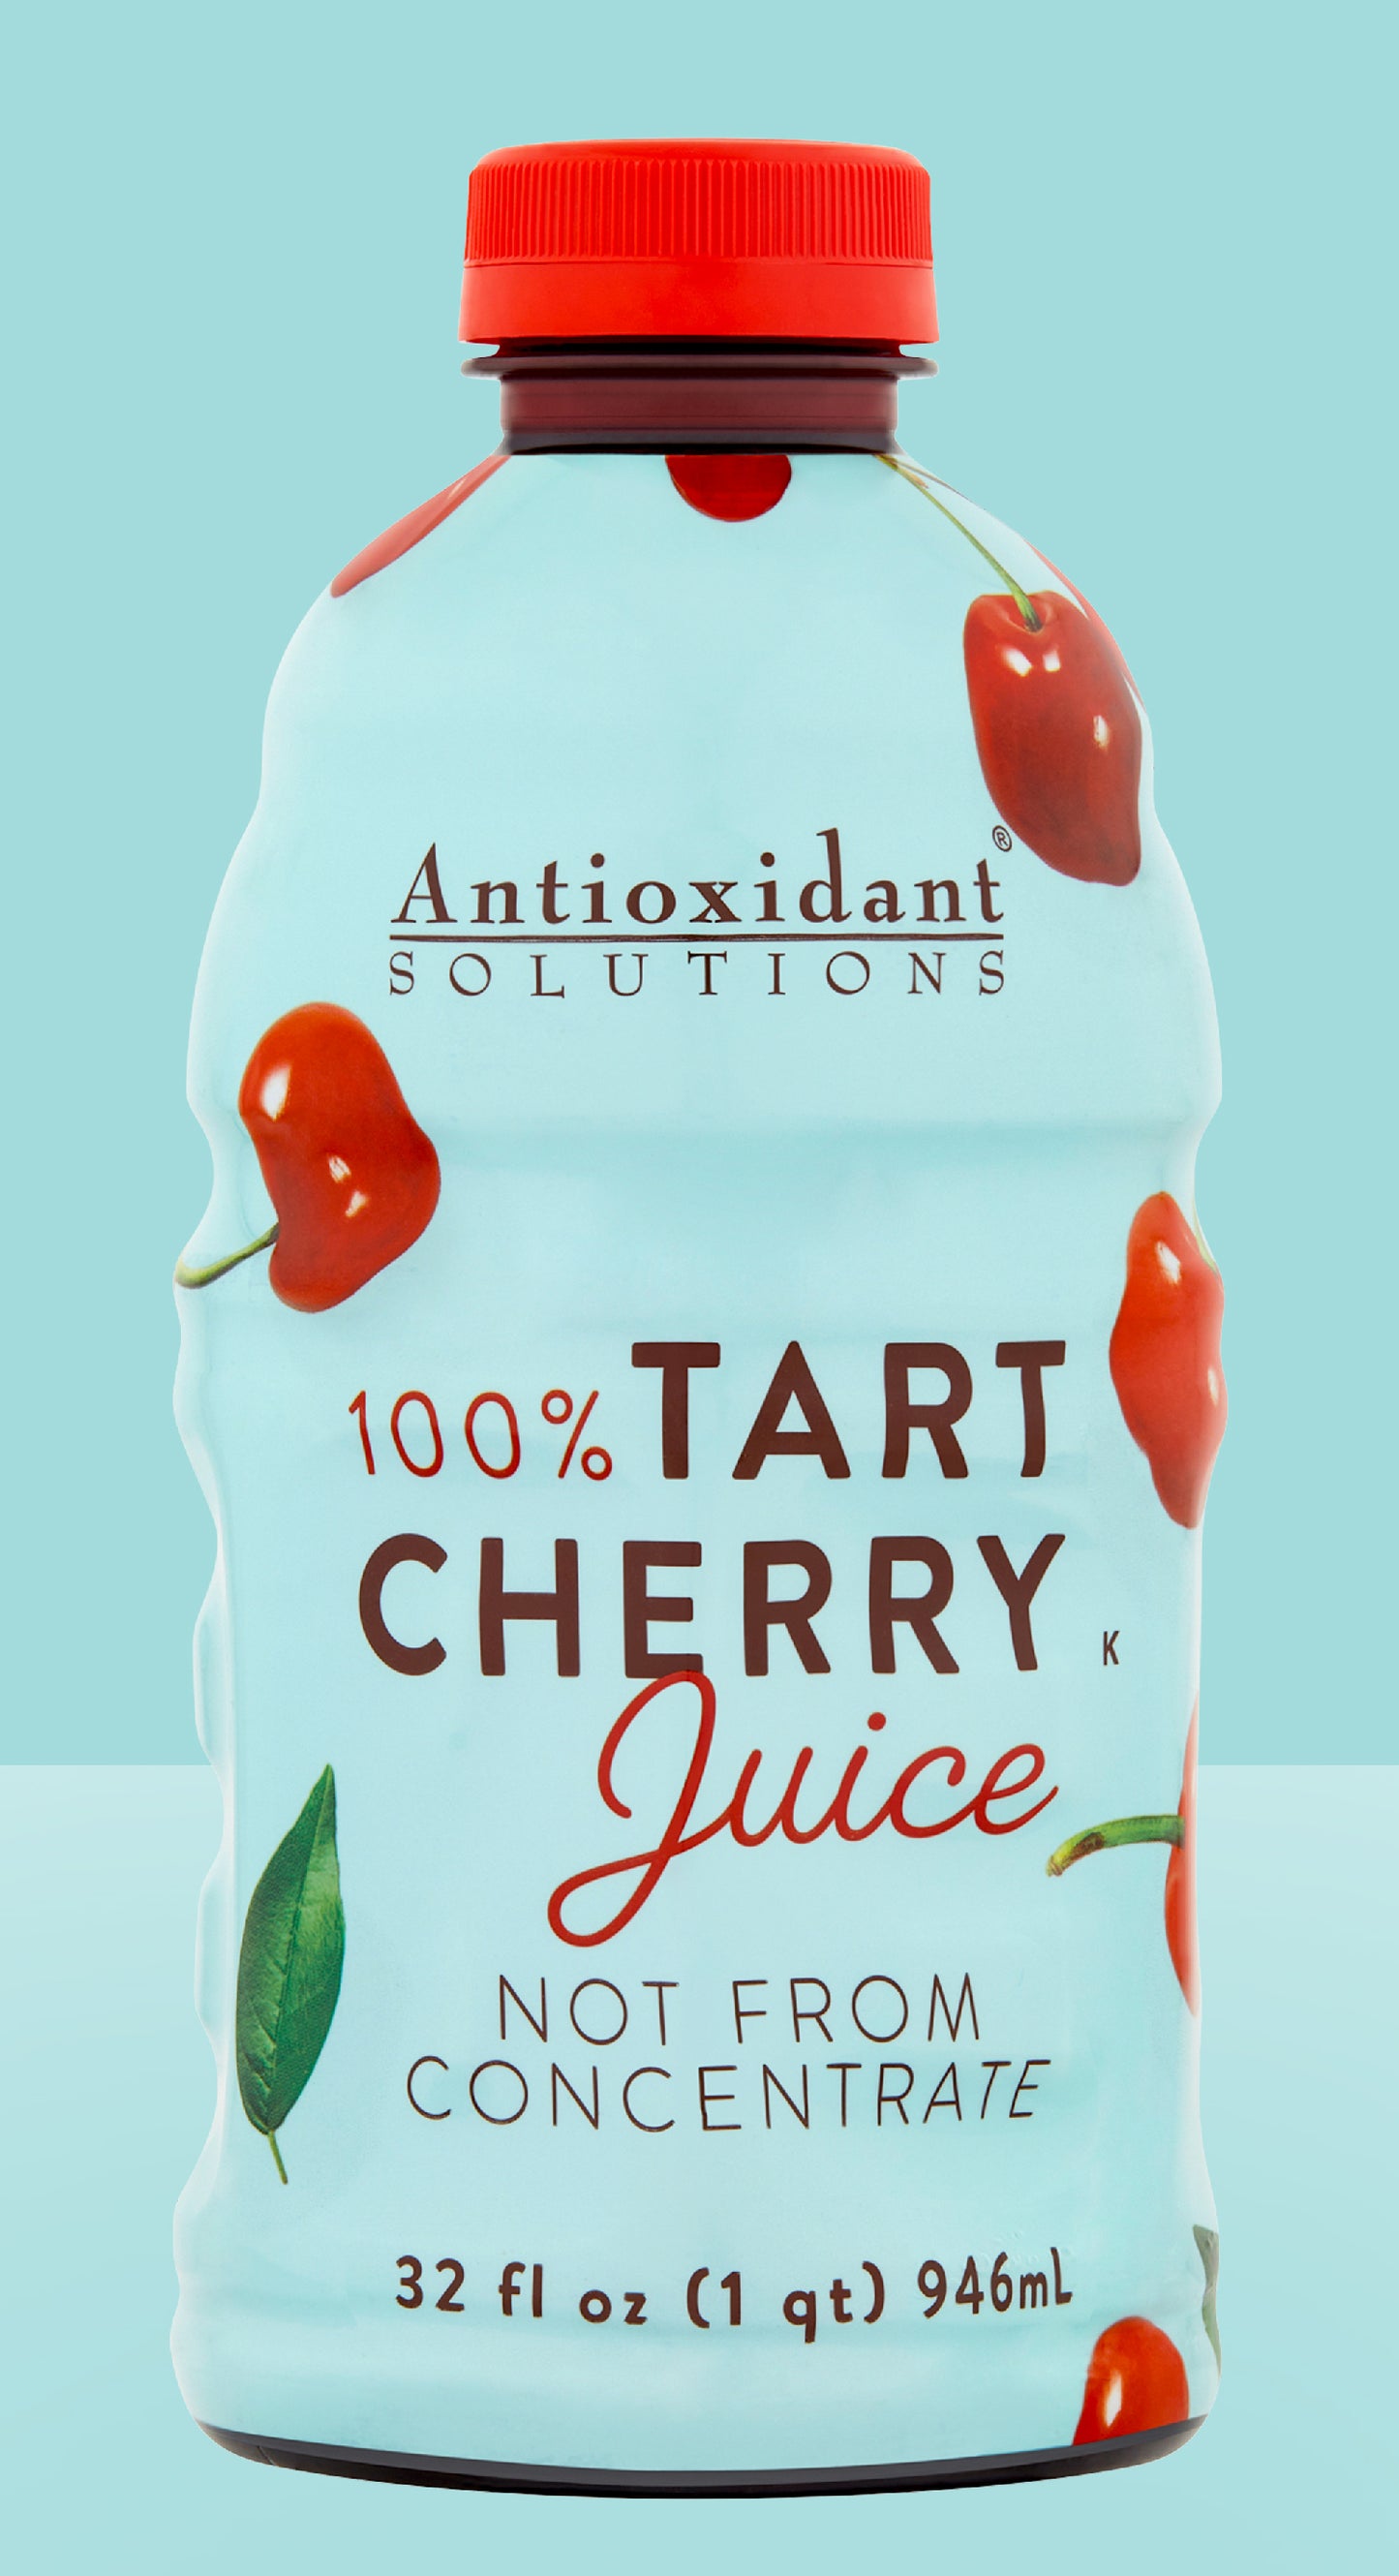 Antioxidant Solutions